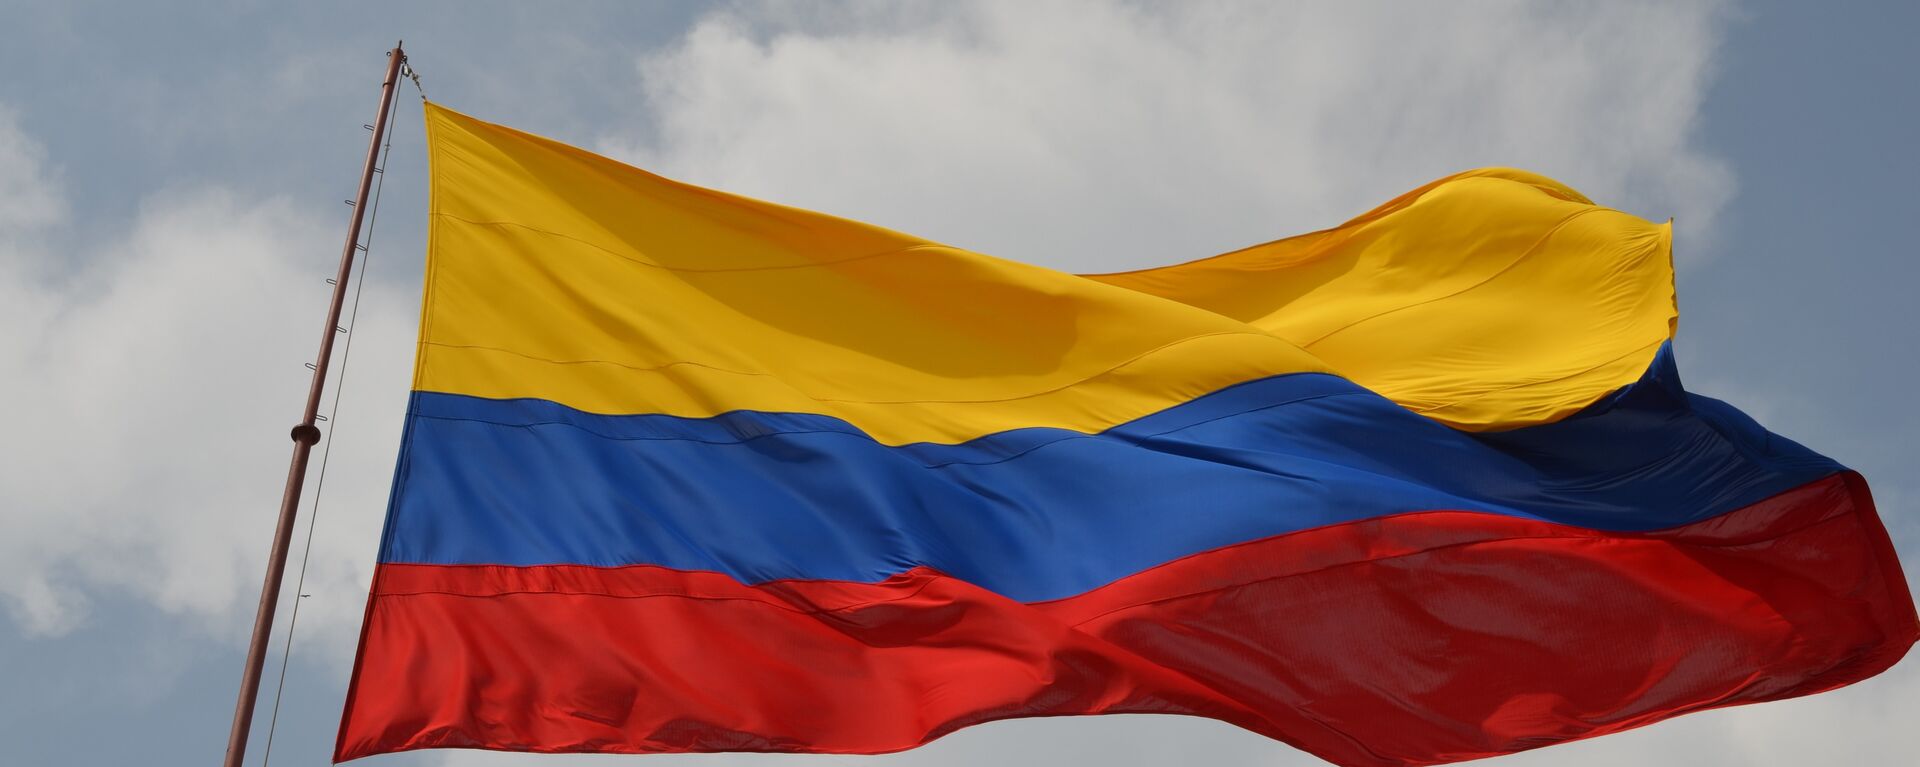 Bandera de Colombia - Sputnik Mundo, 1920, 18.10.2021